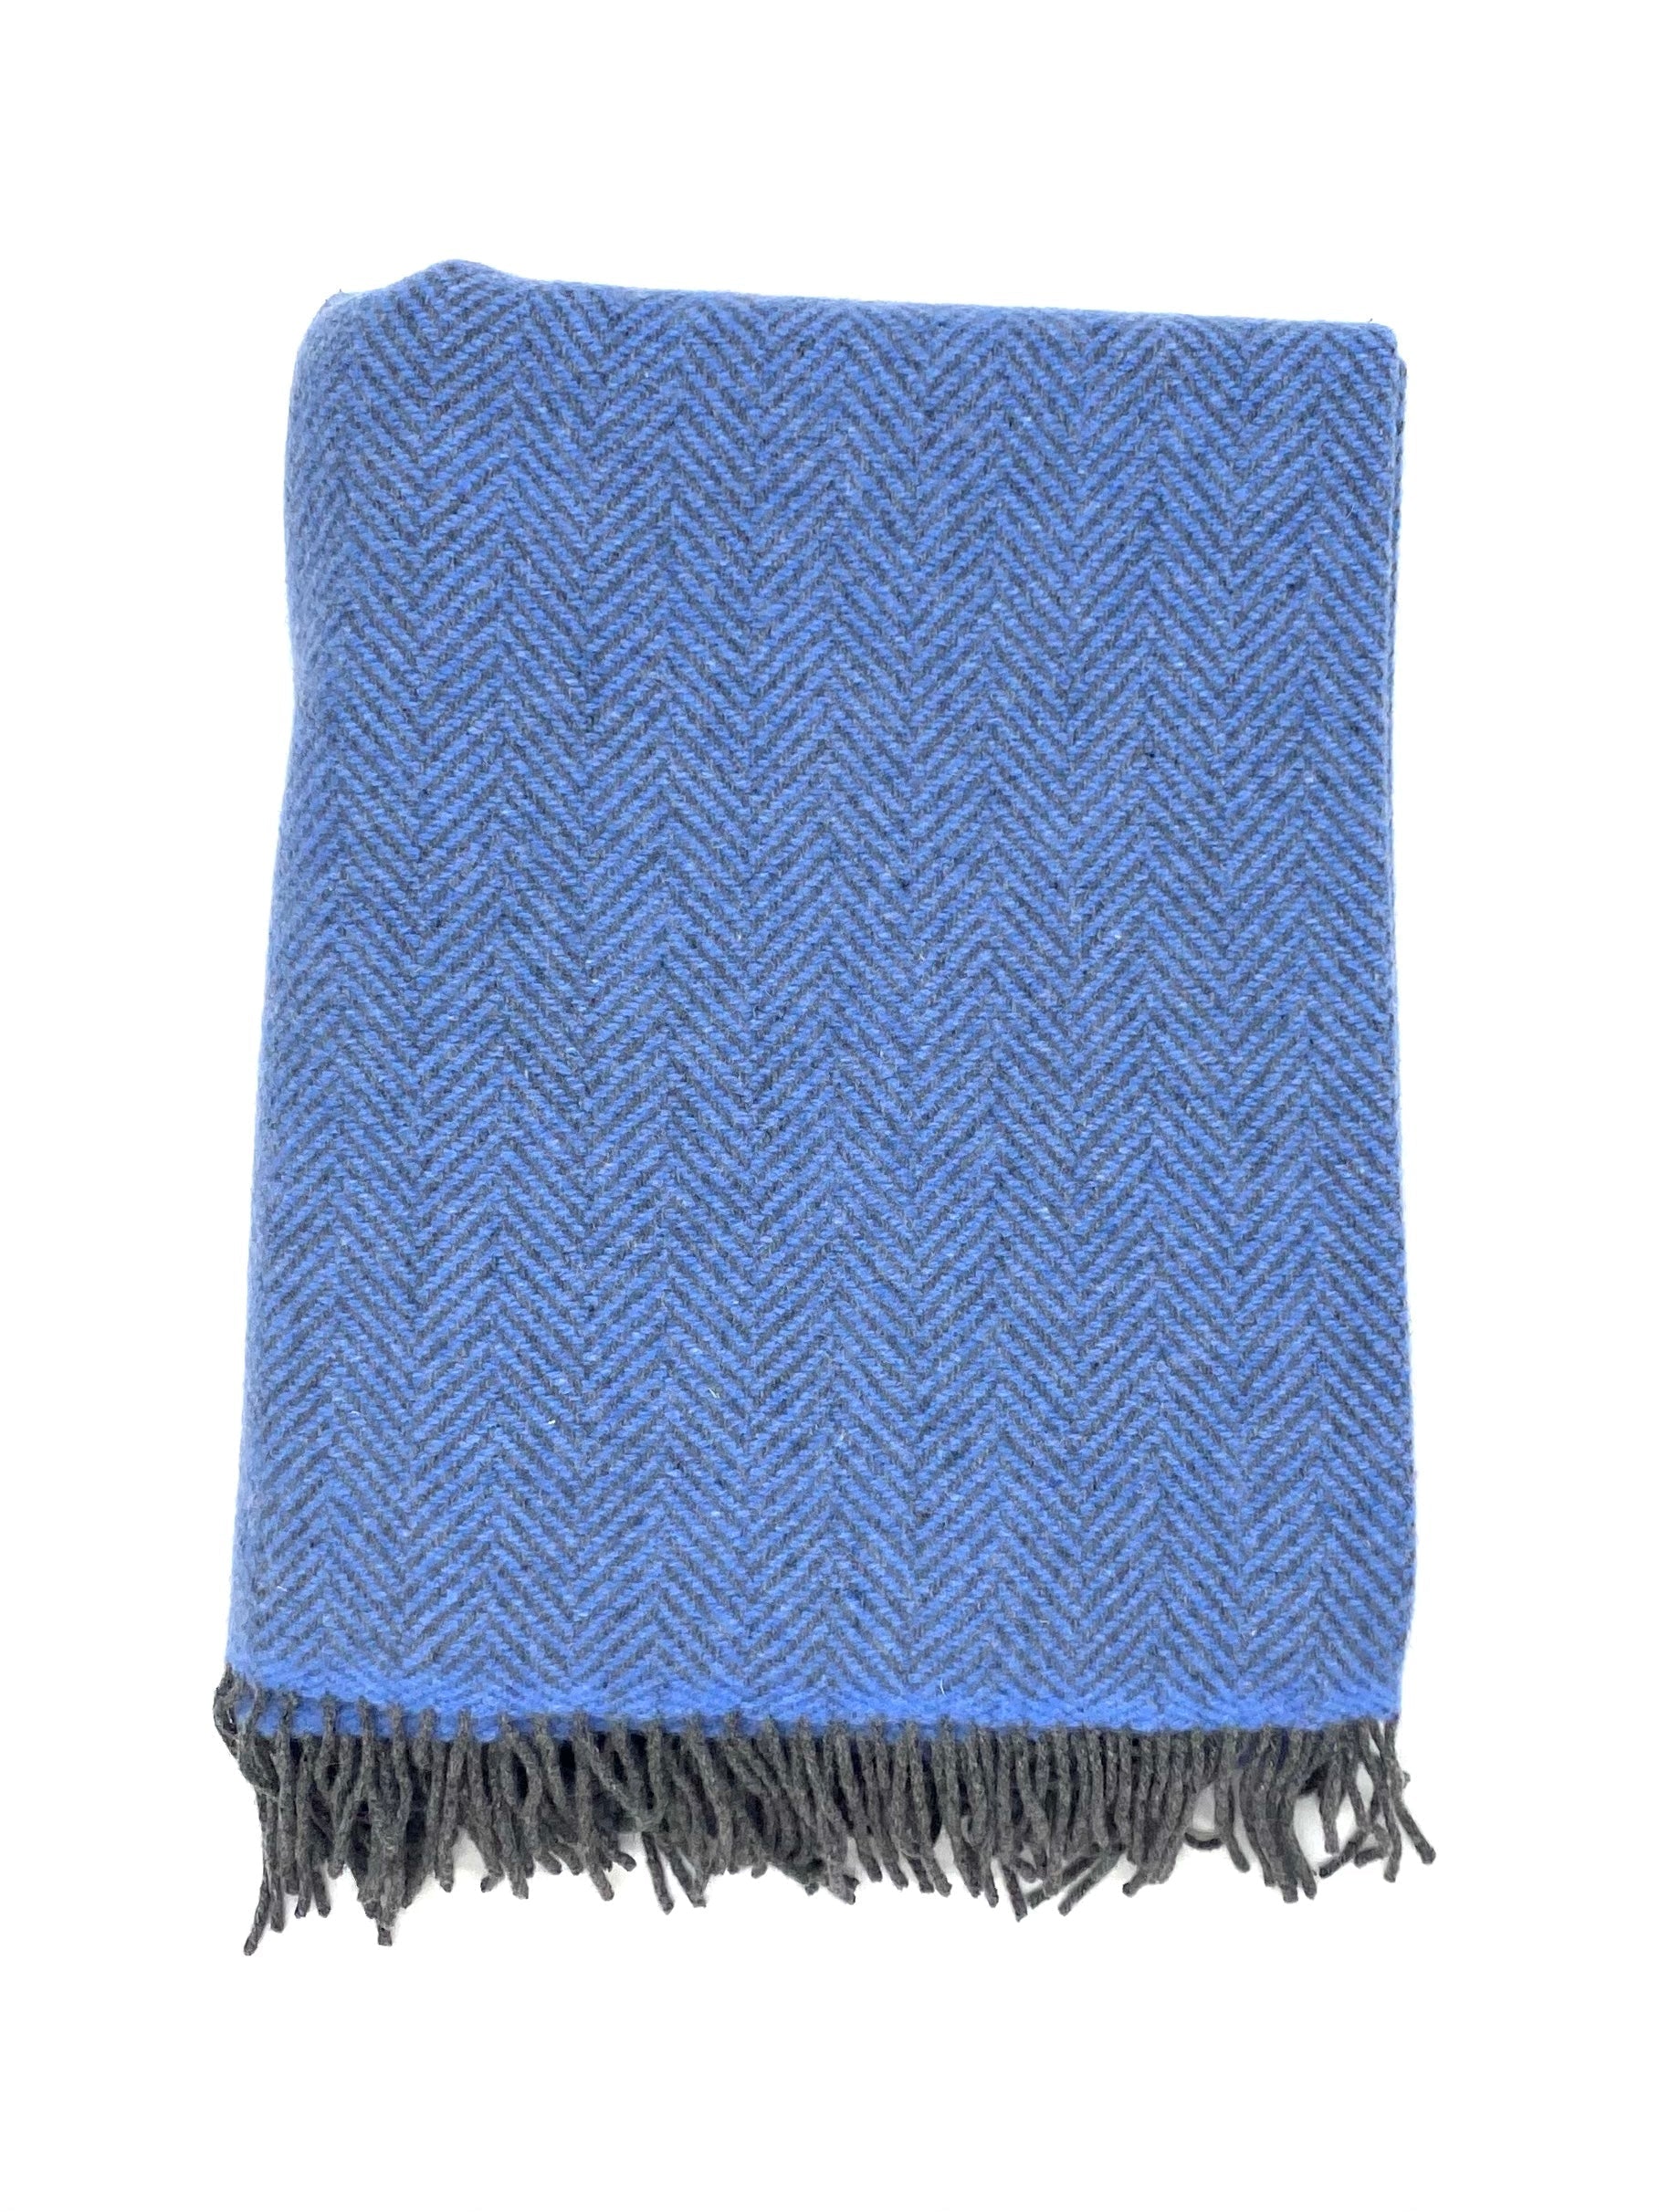 Merino Wool and Cashmere Herringbone Throw - Solid Mid Blue